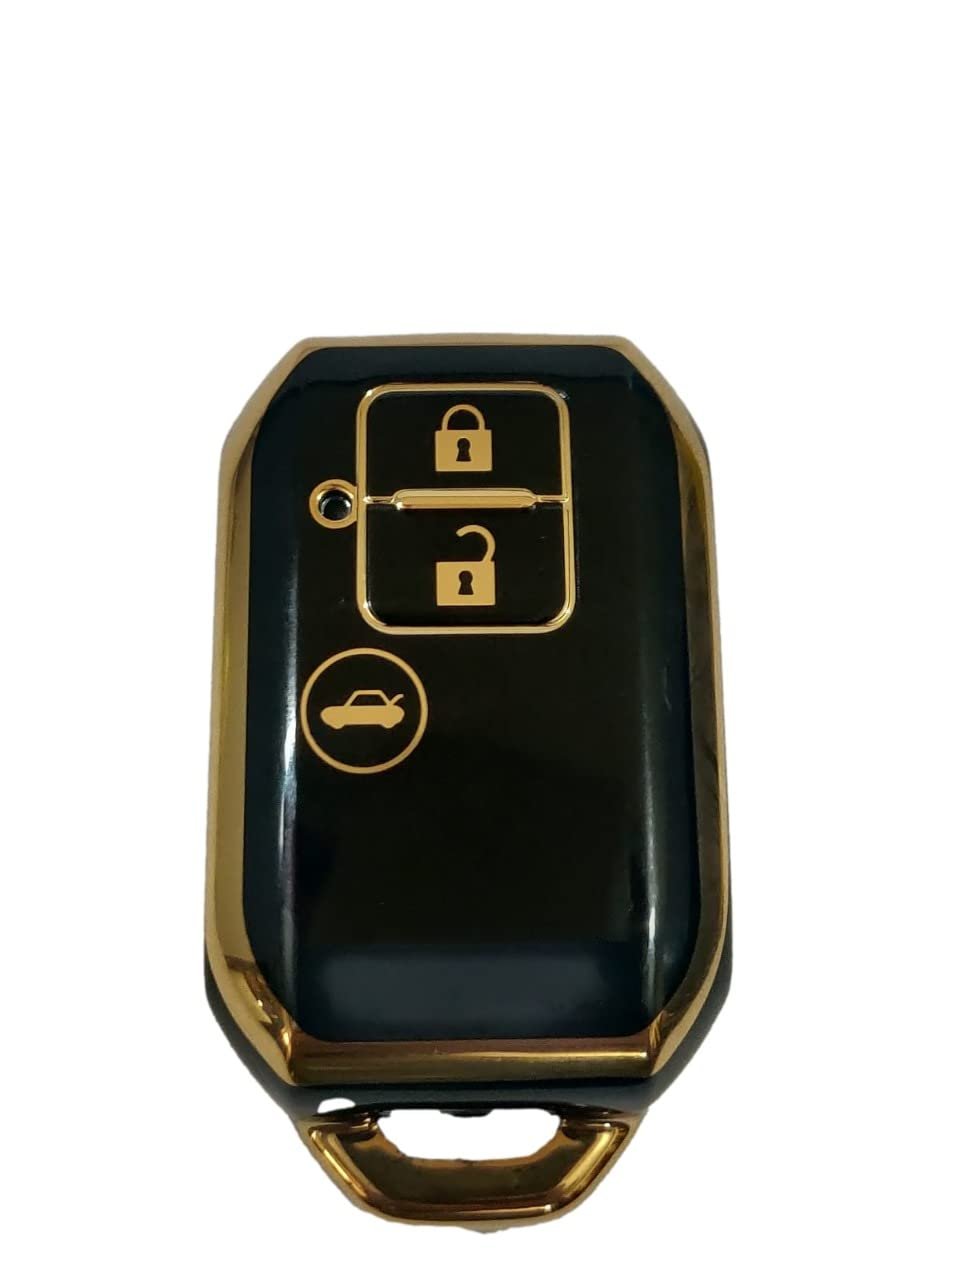 TPU Key Cover Compatible DZire, Swift, Ertiga 3 Button Smart Key (Push Button Start Models only) (Black) Image 